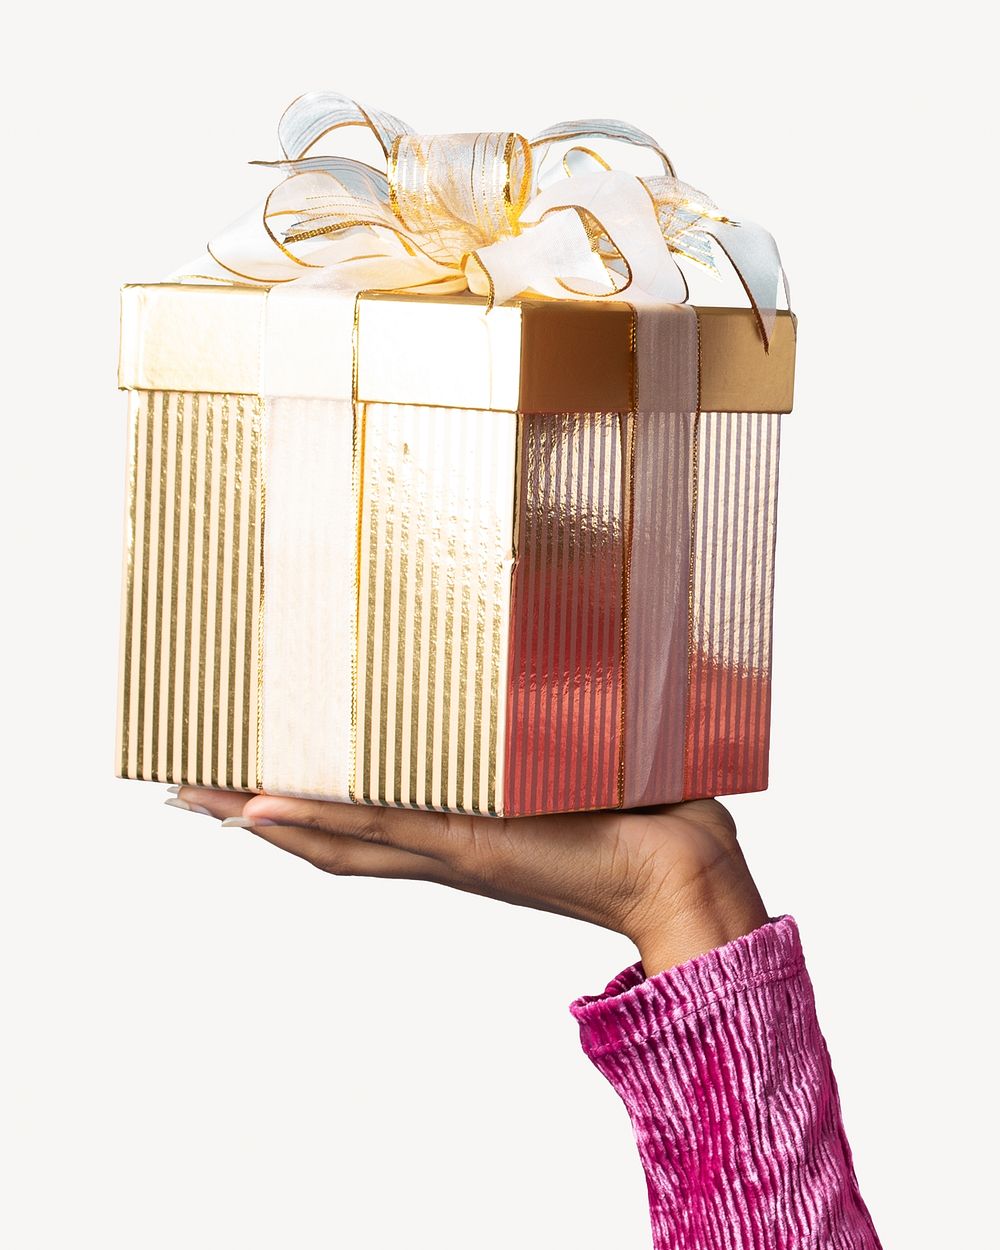 Hand holding gift box isolated image